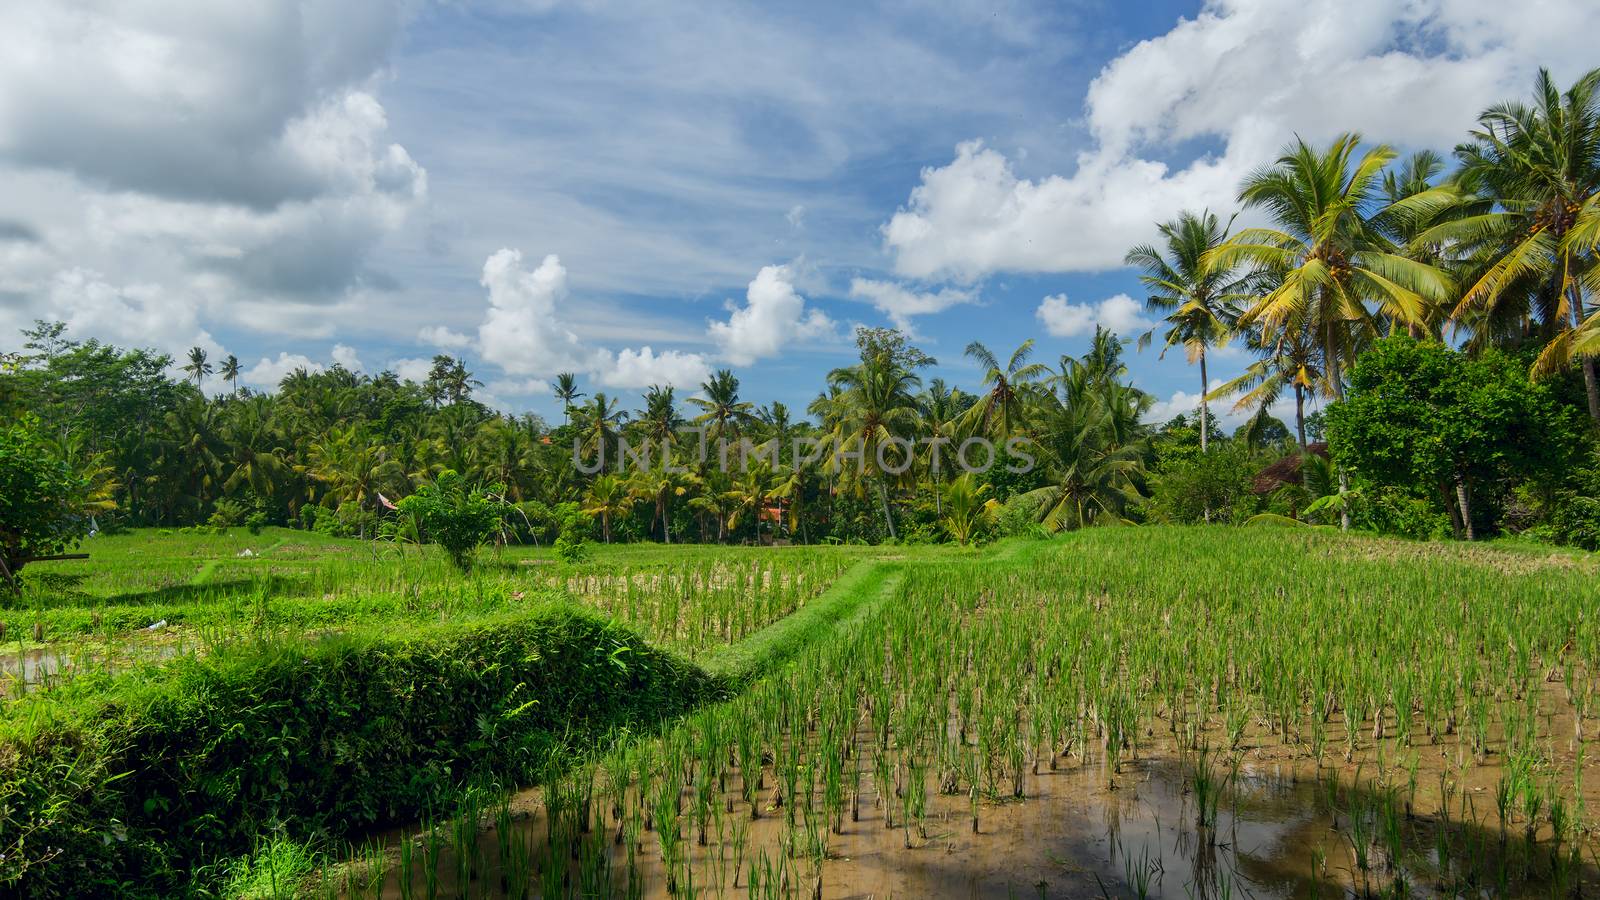 Rice field near the town of Ubud